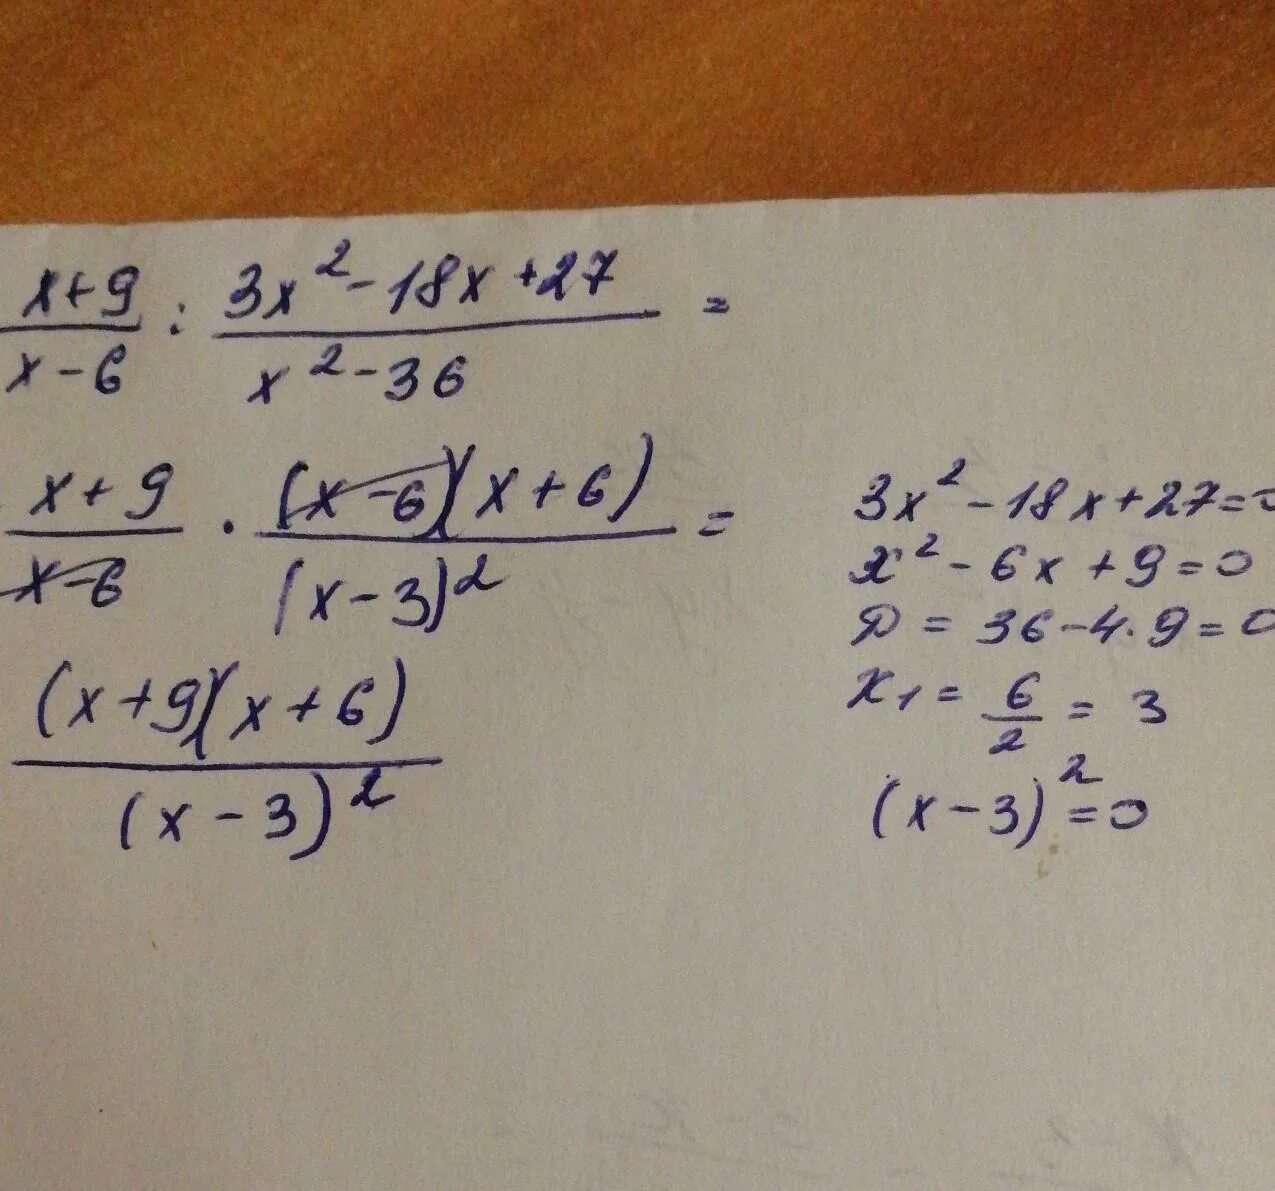 Упростить выражение x2-9/x-6 2 - 27 6x-x 2. X-9/x2-9 3/3x-x2 упростите выражение. 3/X+3+3/x2-3x+2x/9-x2 упростите выражение. X^3-9x^2+27x-27. 3 6 x 27 2x